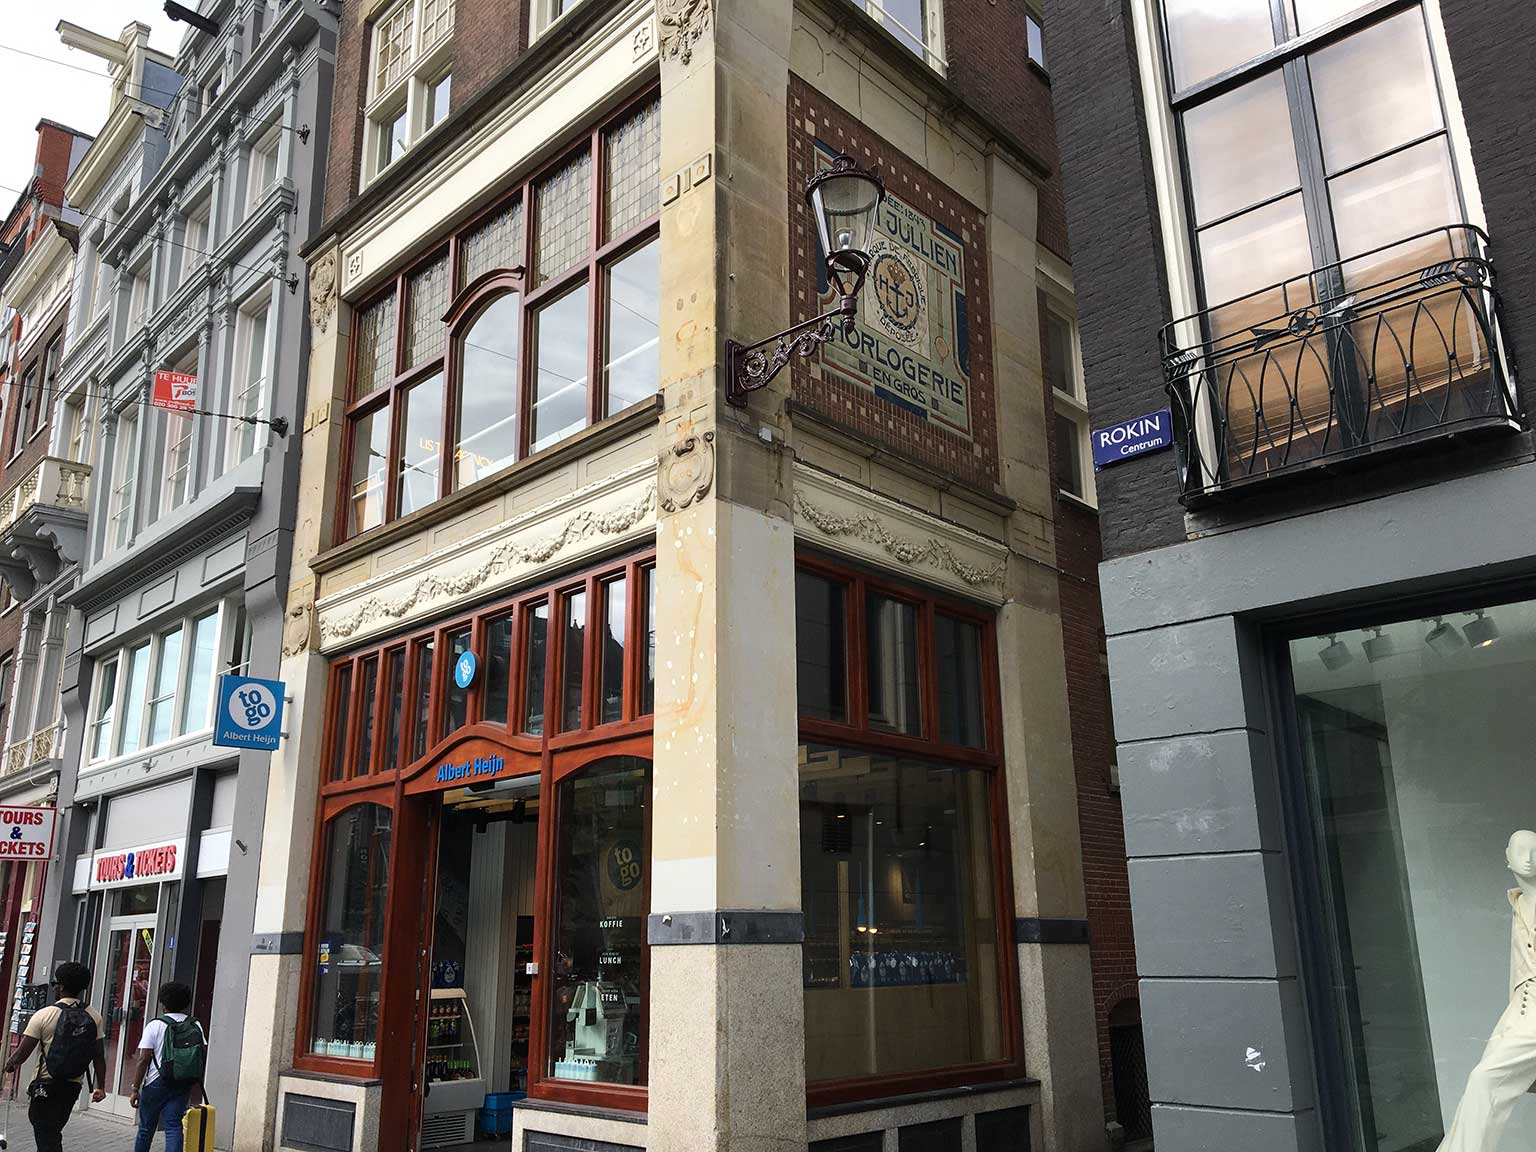 Gapersteeg, Amsterdam, tussen Rokin 34 en 36, met muurreclame voor horlogier Henri Jullien